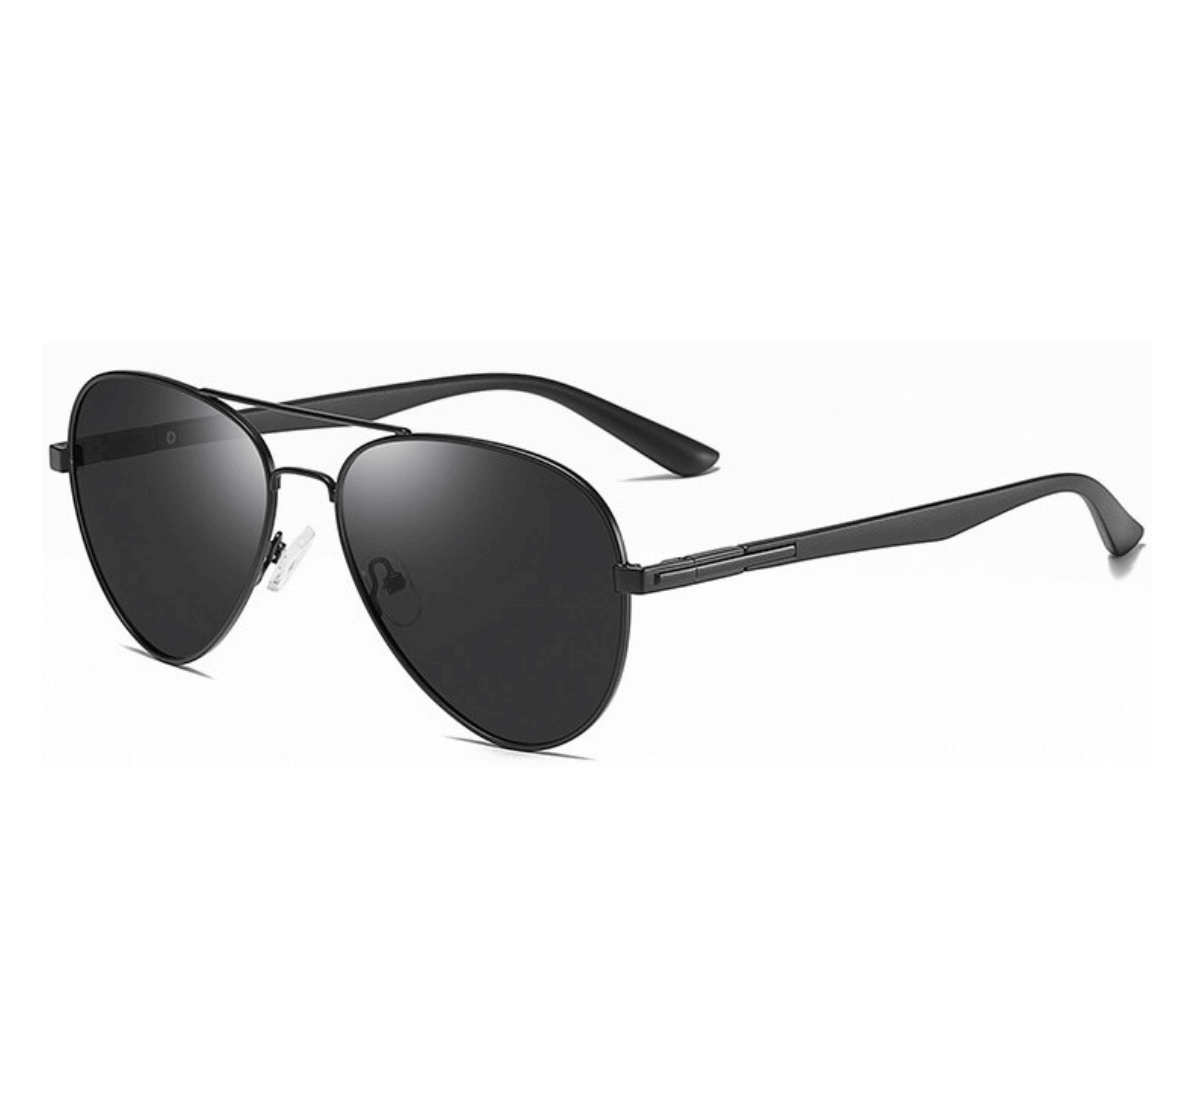 wholesale sunglasses polarized, aviator sunglasses, wholesale polarized sunglasses China, bulk polarized sunglasses, sunglasses factory